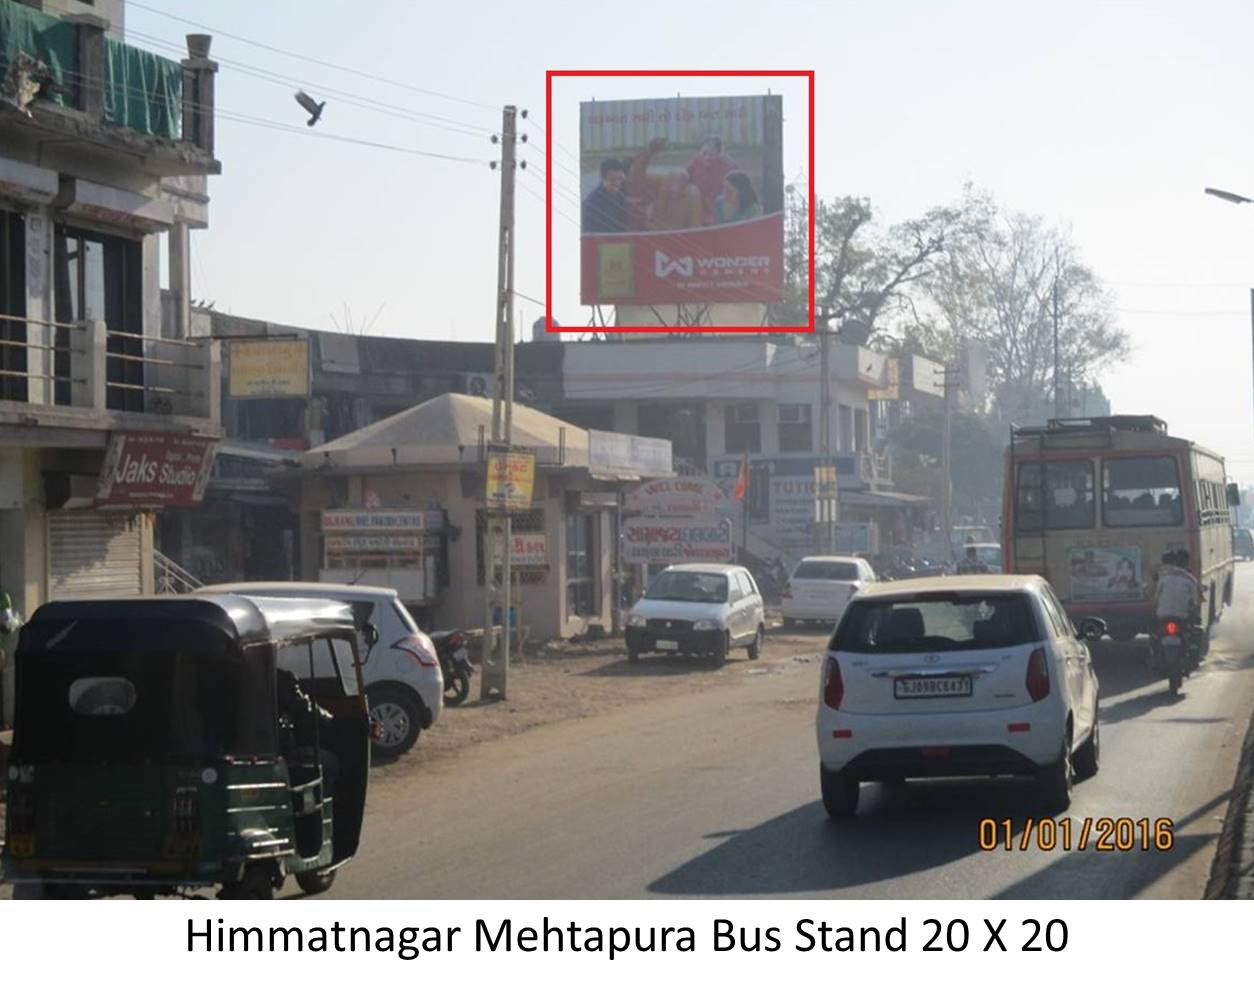 Mehtapura Bus Stand, Himatnagar